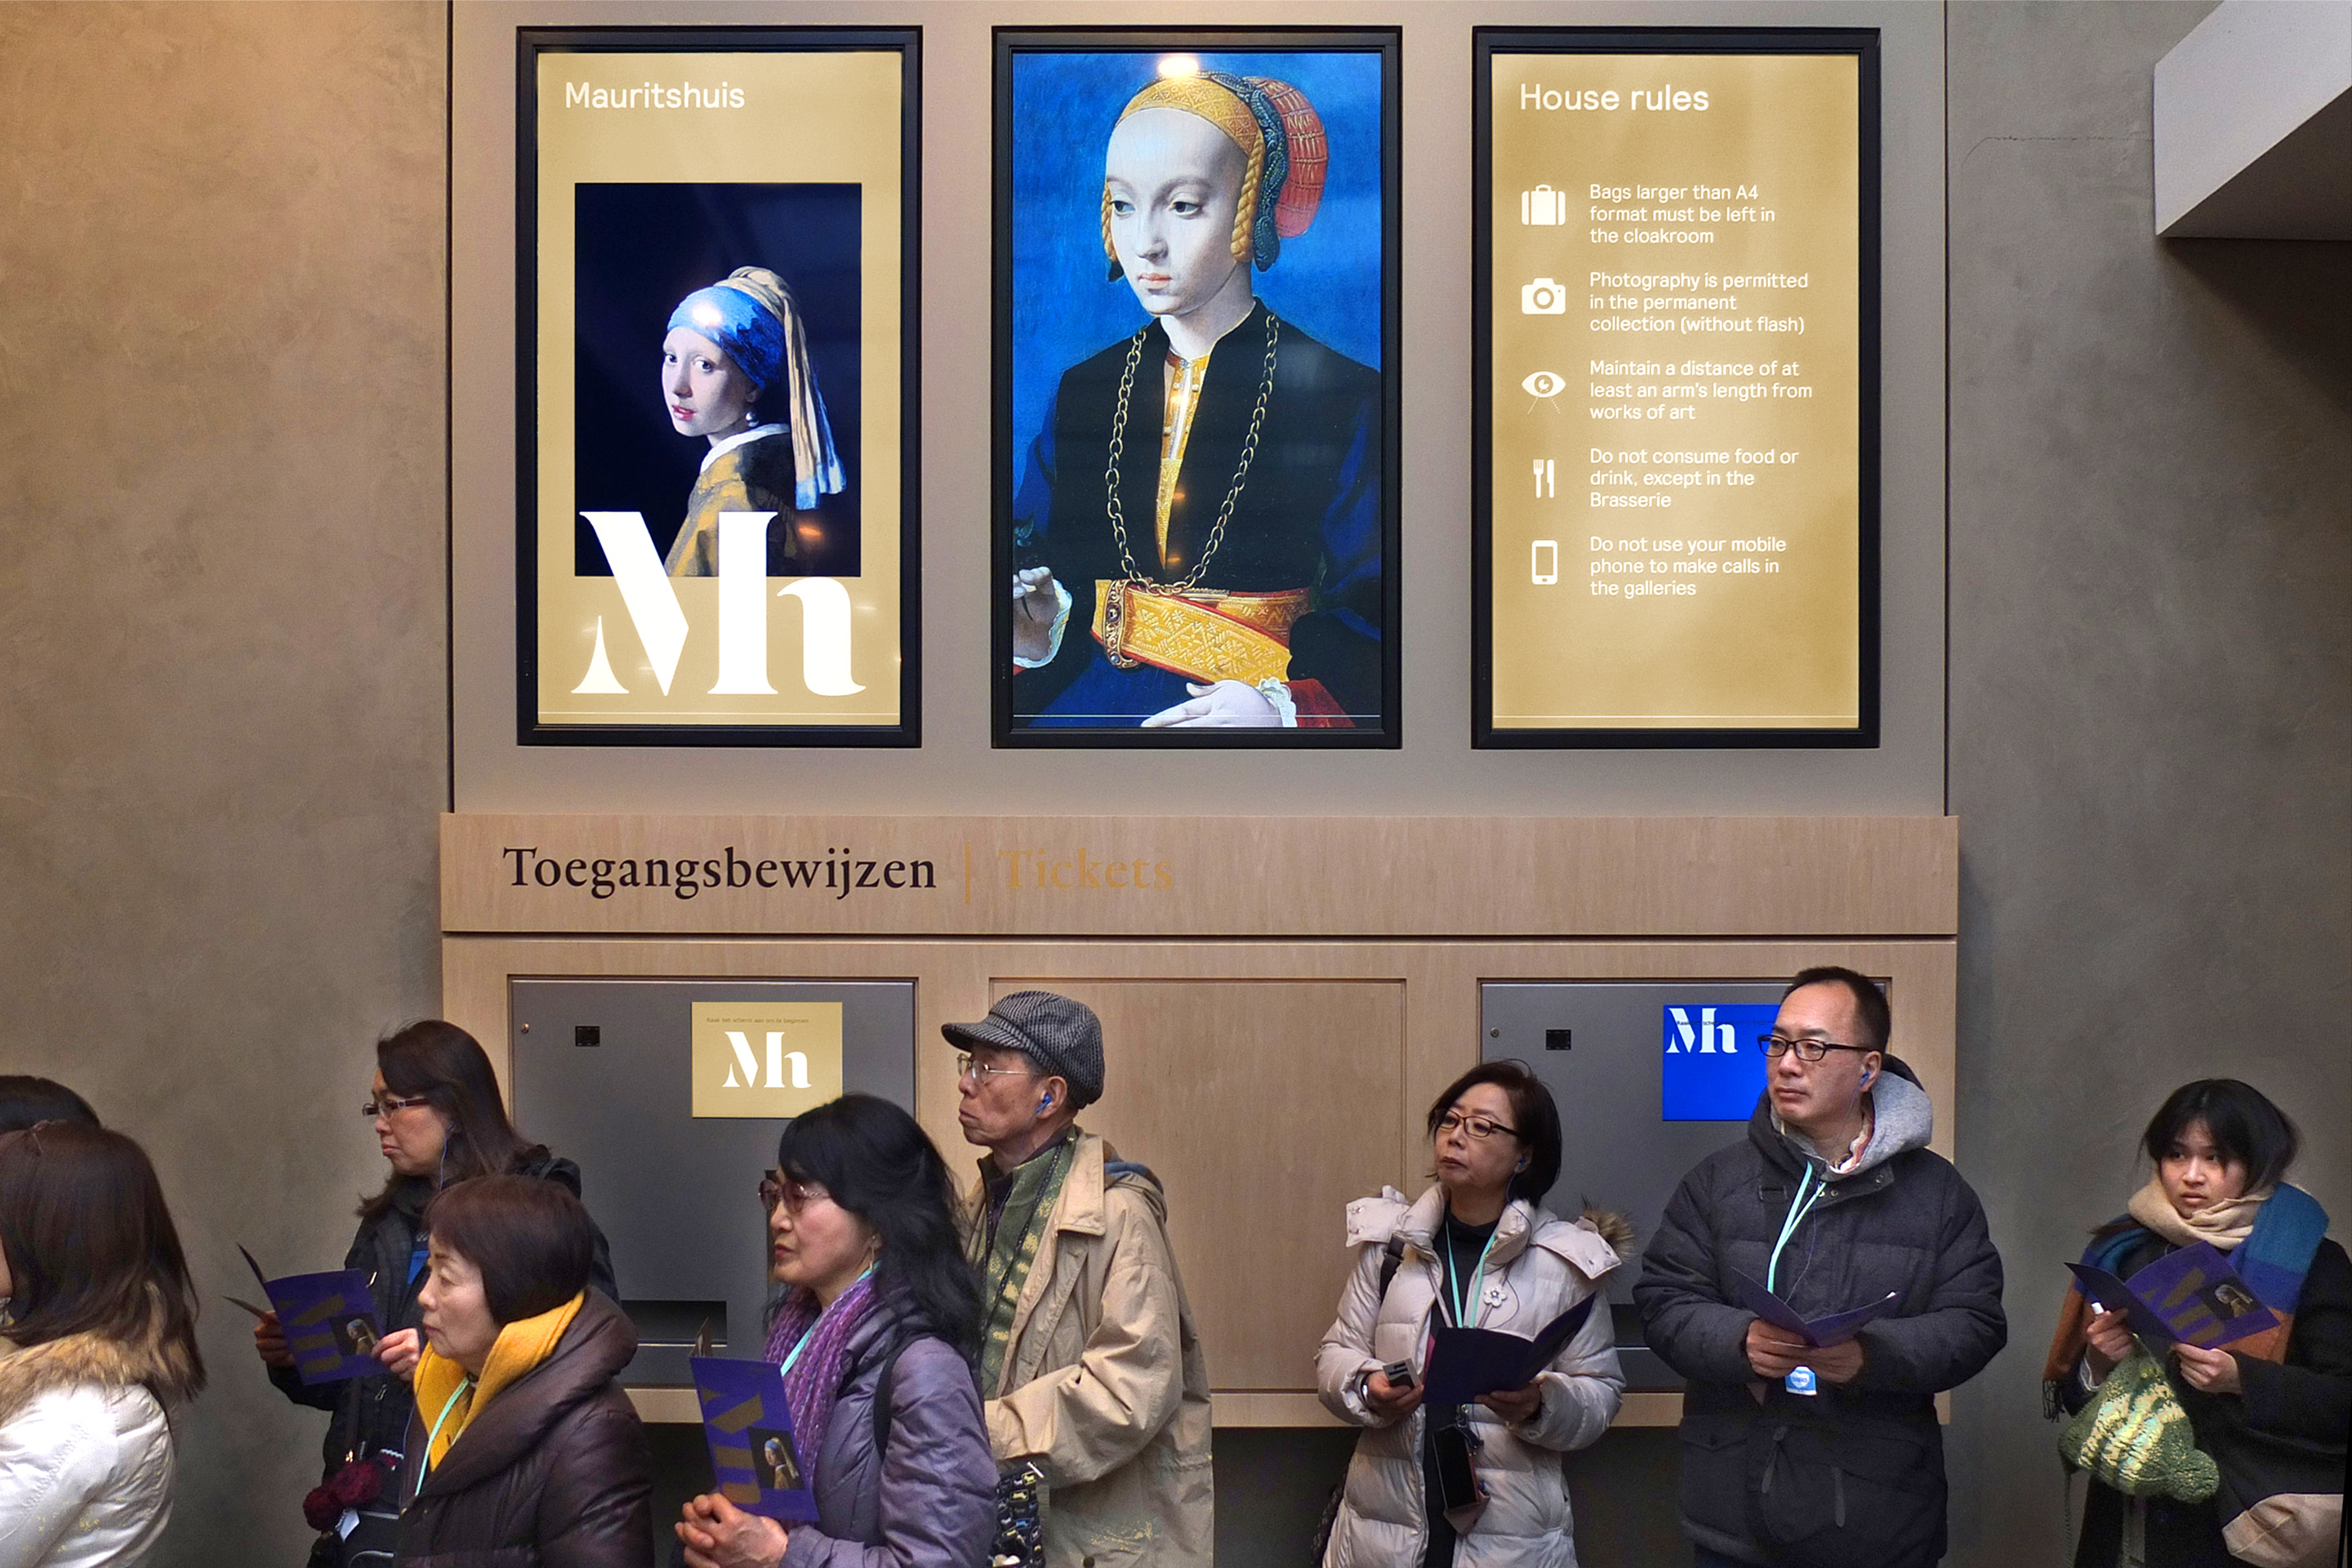 studio dumbar design visual brand identity for Mauritshuis Royal Picture Gallery  interior narrowcasting screen design